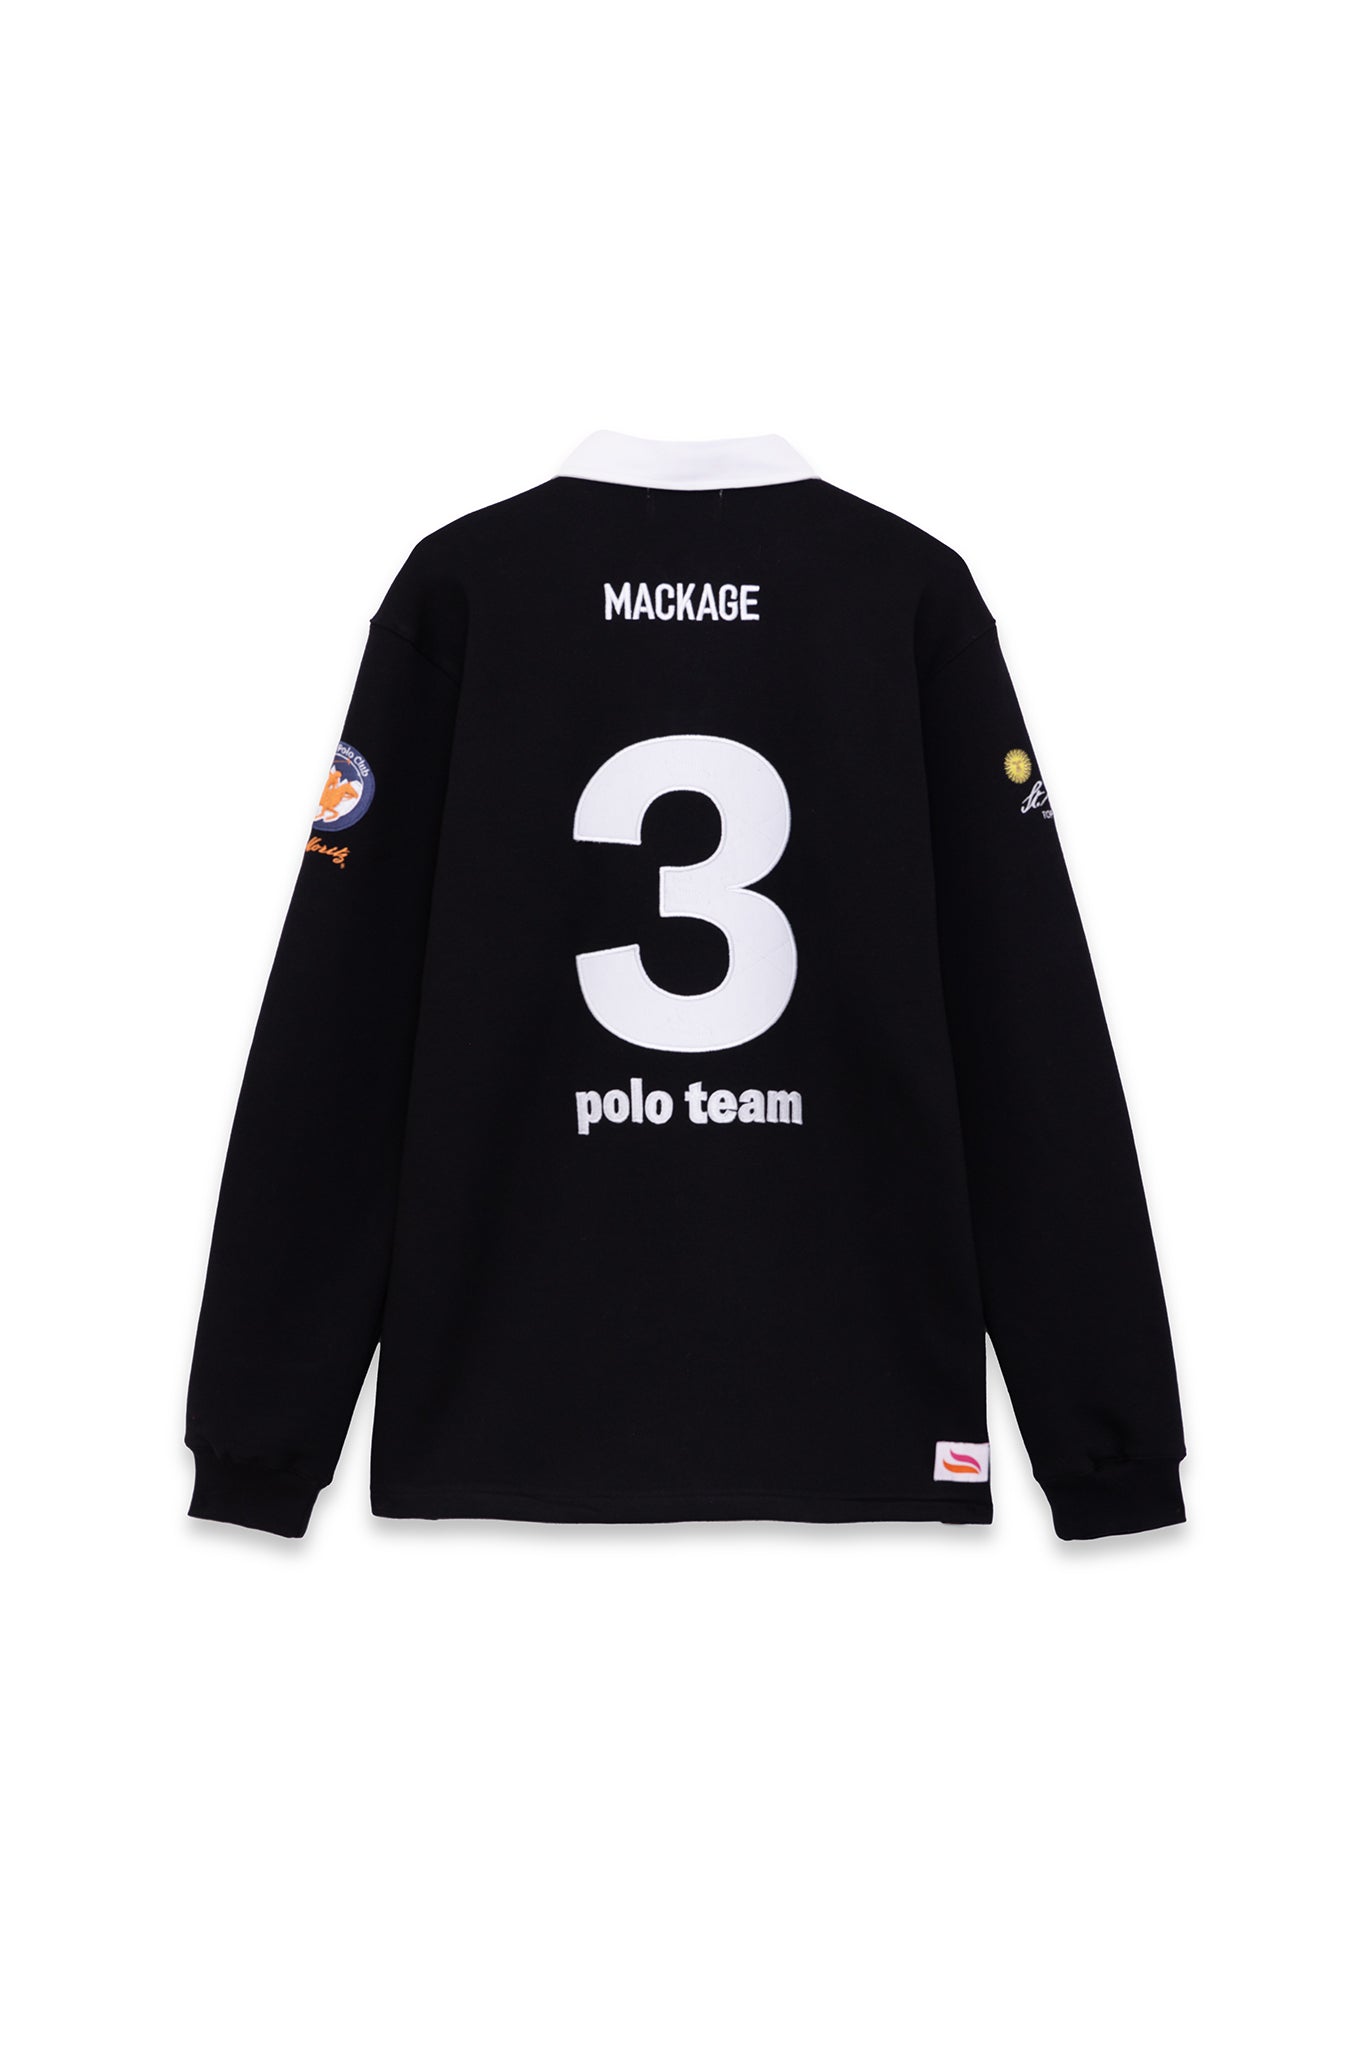 Team Mackage Fleece Black - St. Moritz 2024